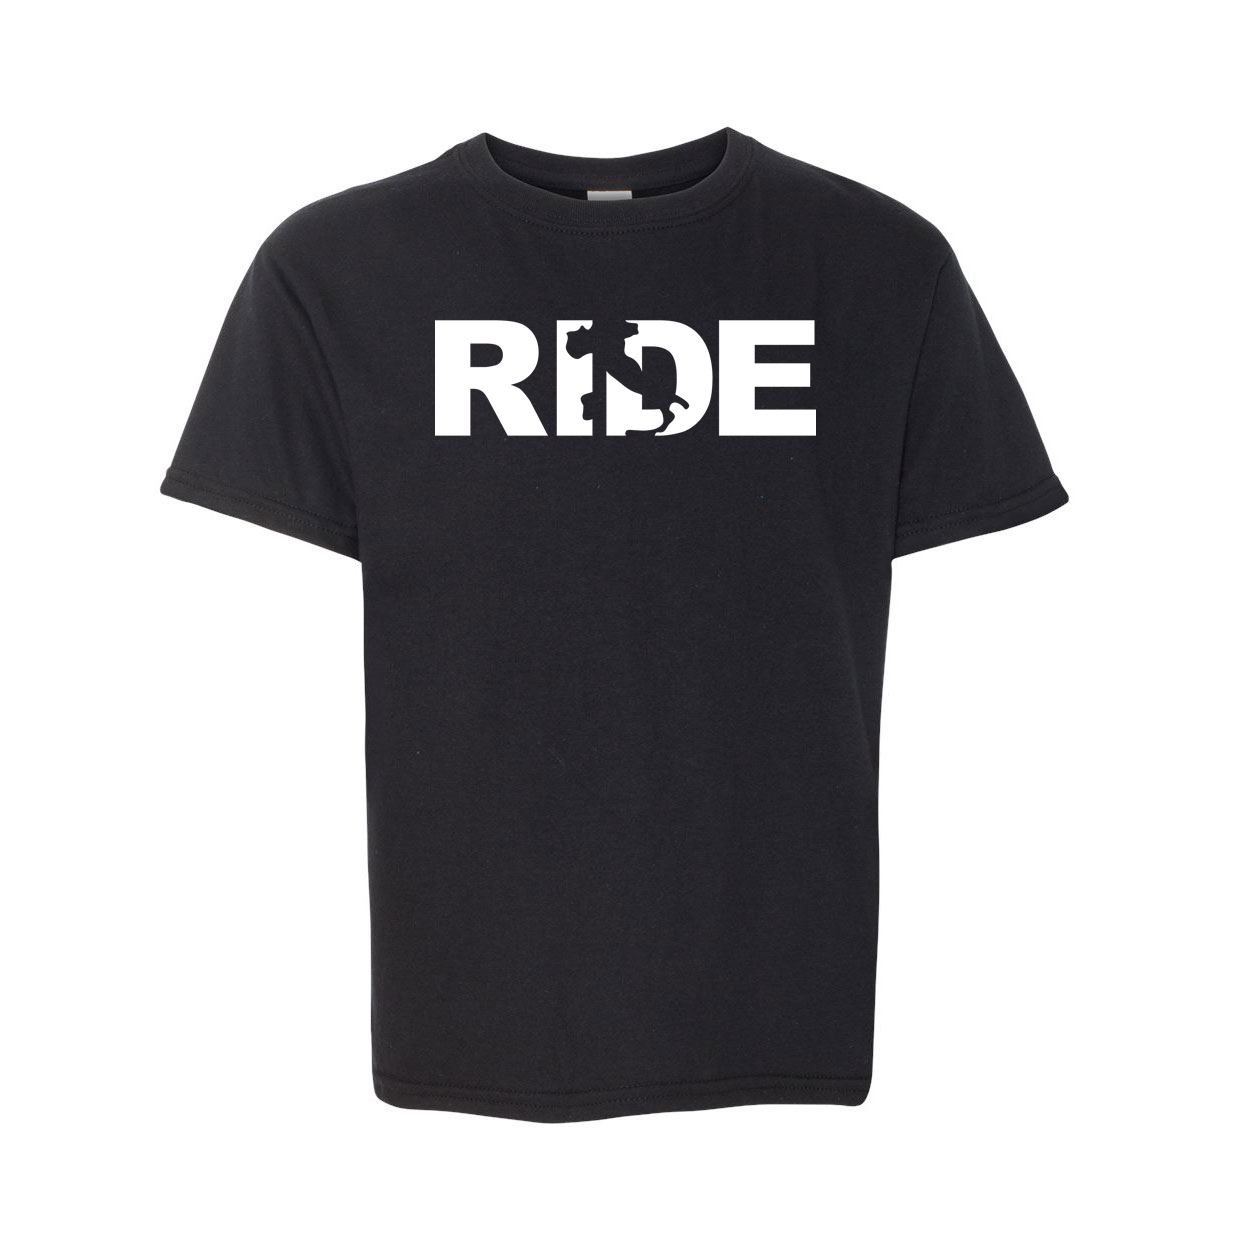 Ride Italy Classic Youth T-Shirt Black (White Logo)